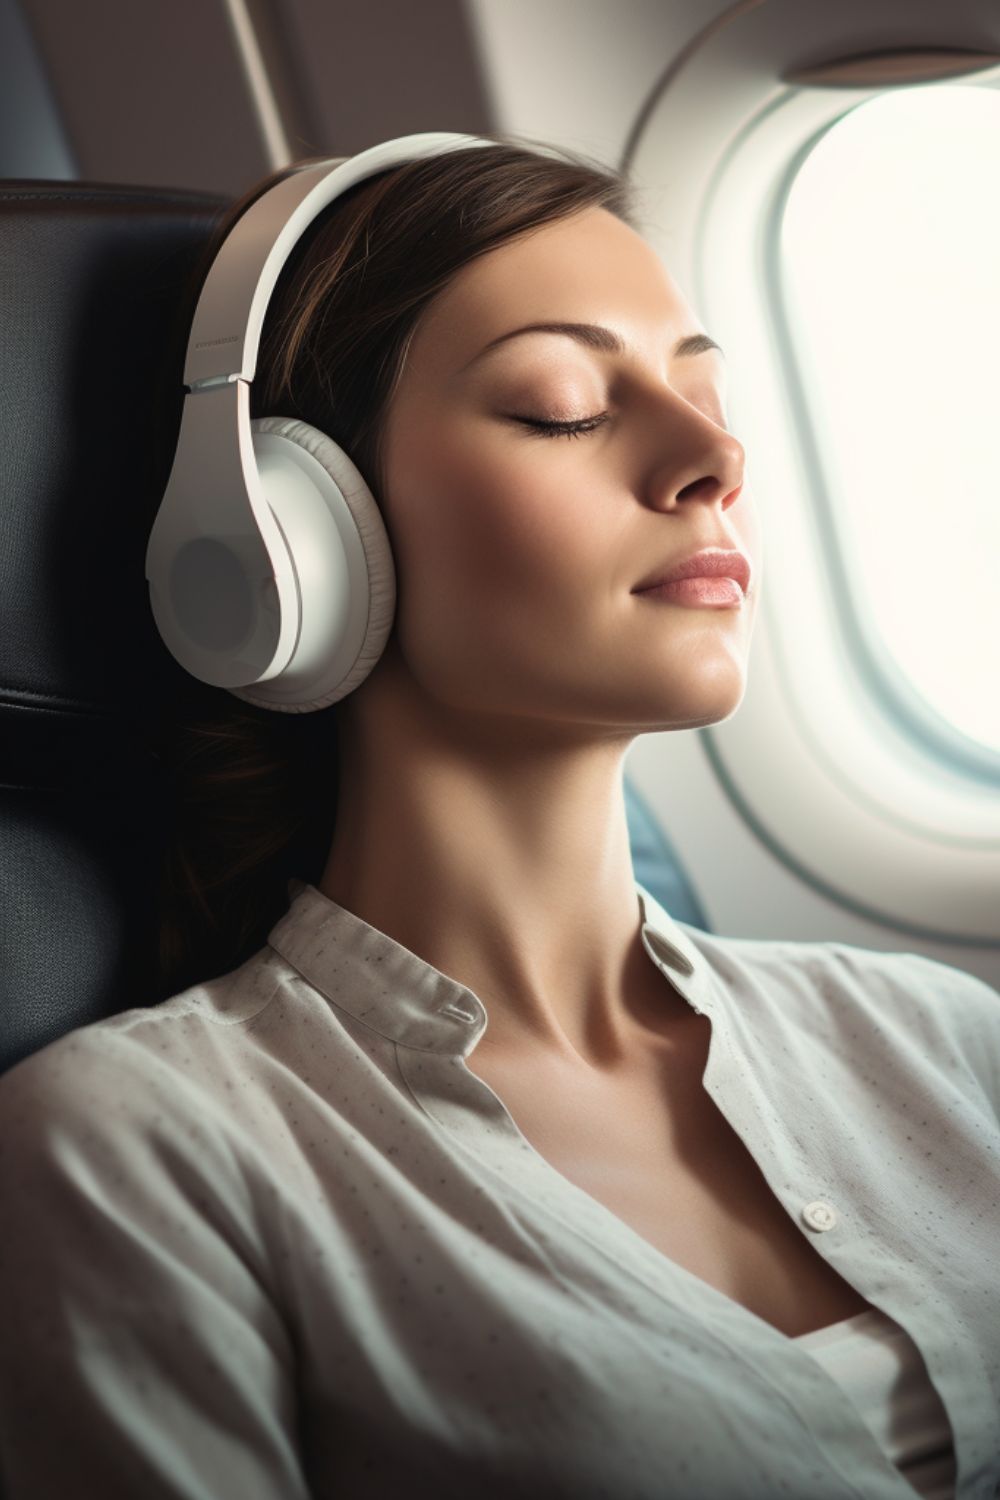 A women wearing headphones relaxing on a plane. 